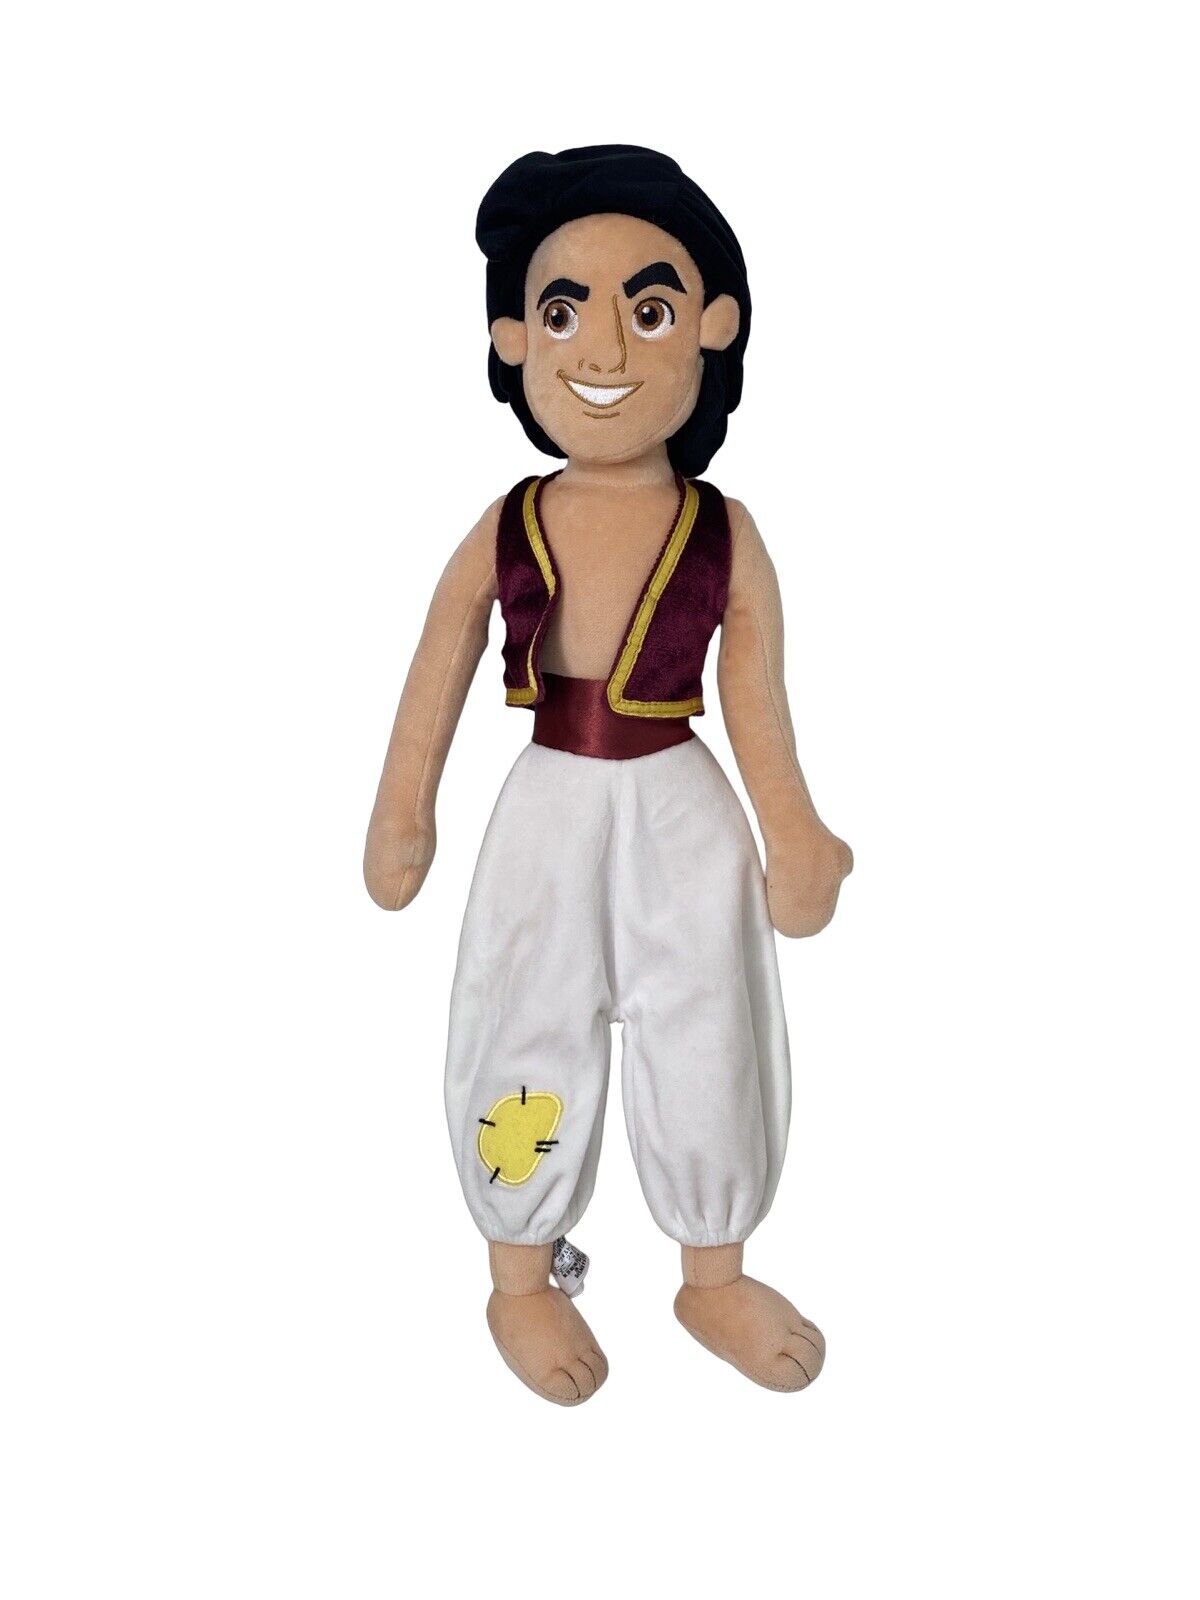 Disney Store Exclusive Aladdin 18” Plush Doll